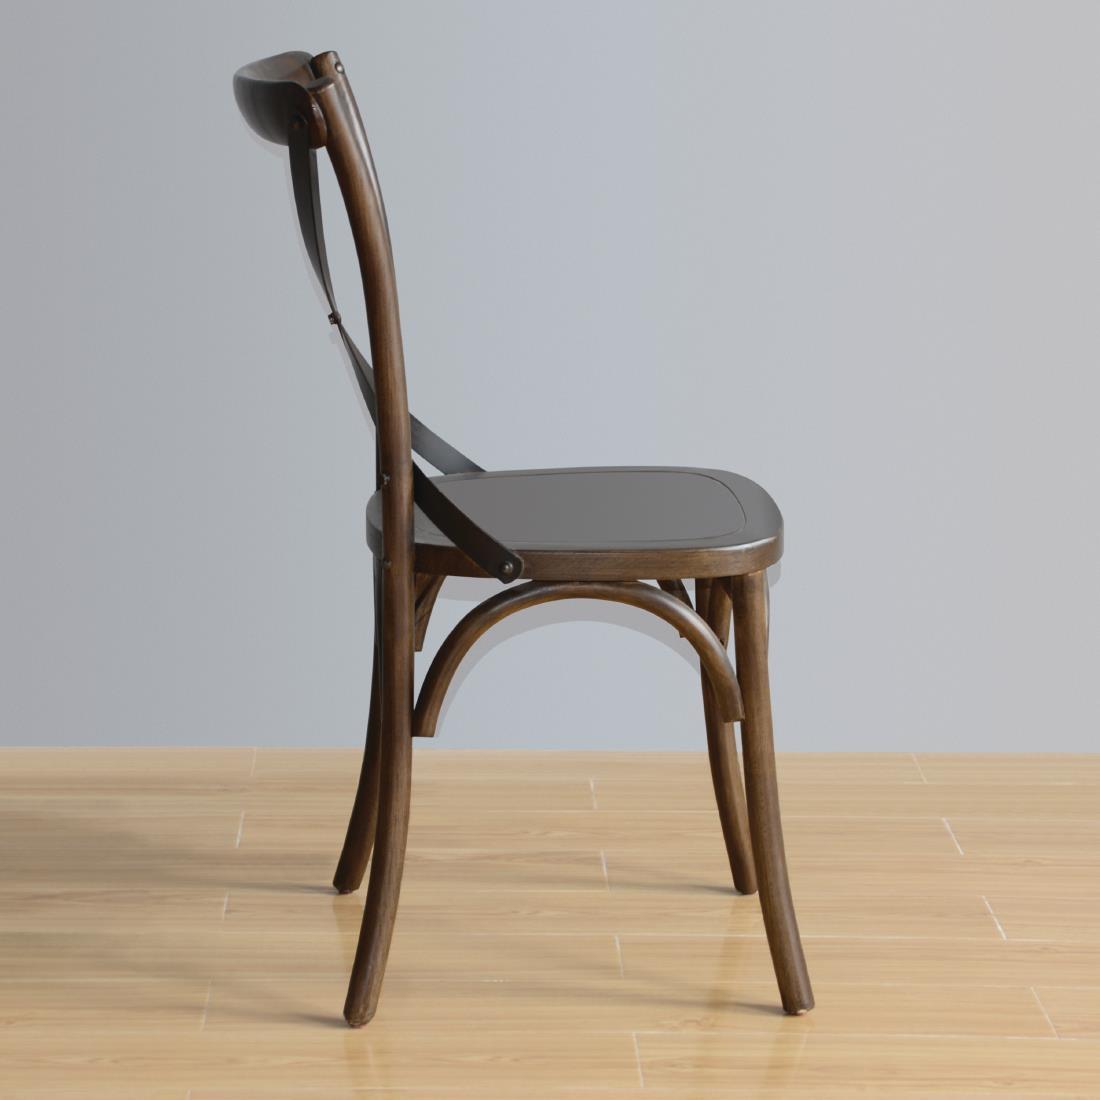 GG658 - Bolero Wooden Dining Chair with Metal Cross Backrest (Walnut Finish) (Pa - GG658  - 6